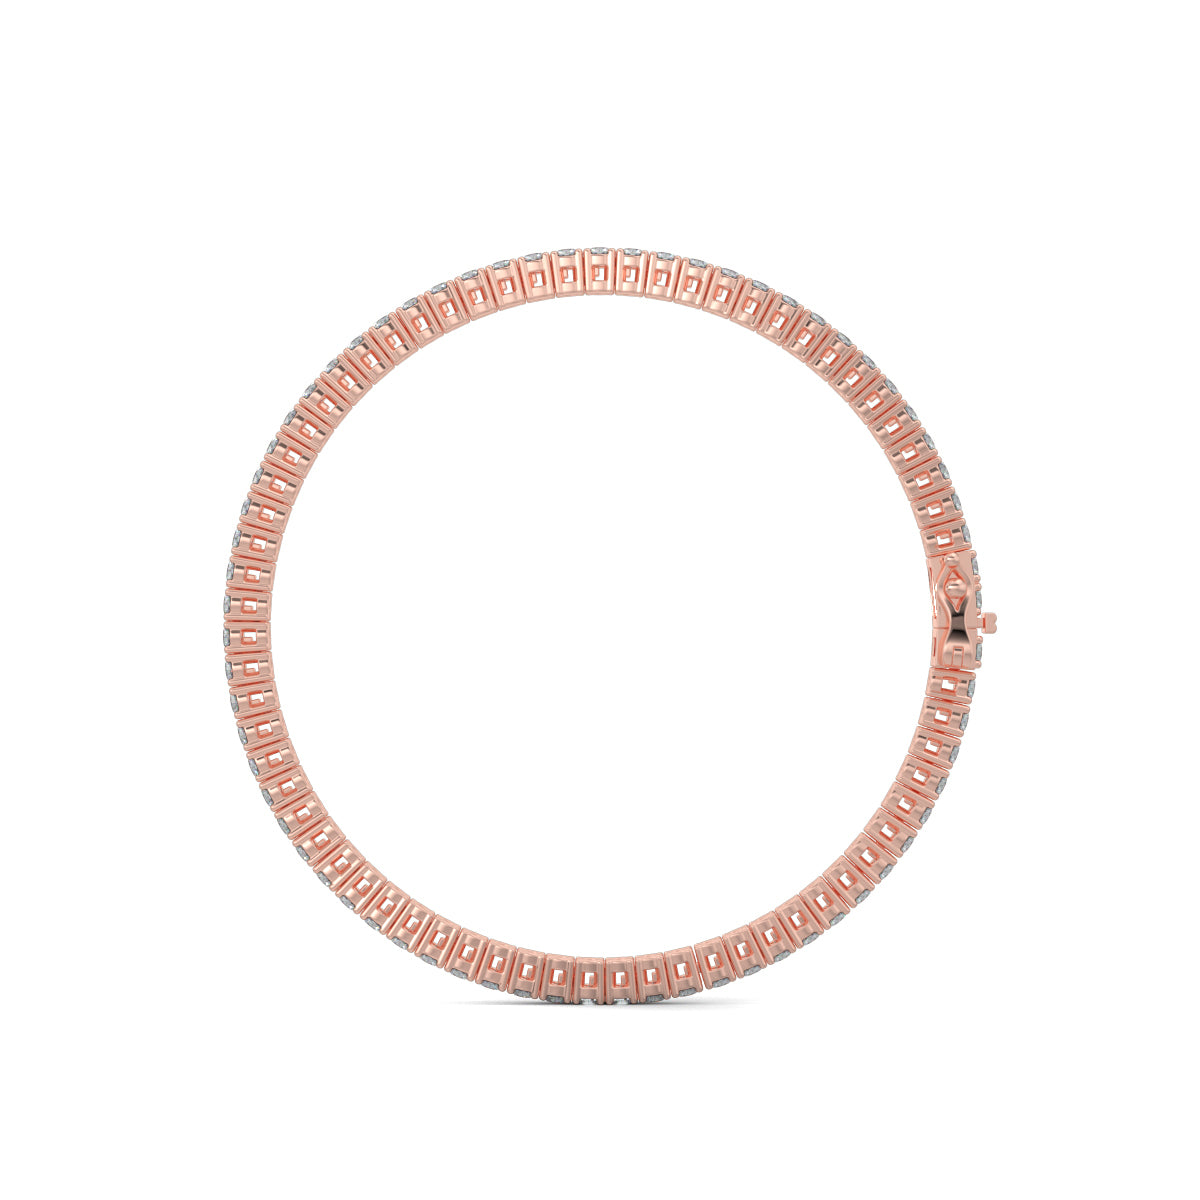 Rose Gold, Diamond Bracelet, Natural diamond bracelet, Lab-grown diamond bracelet, 20-Pointer Tennis Bracelet, tennis bracelet, prong setting, jewelry